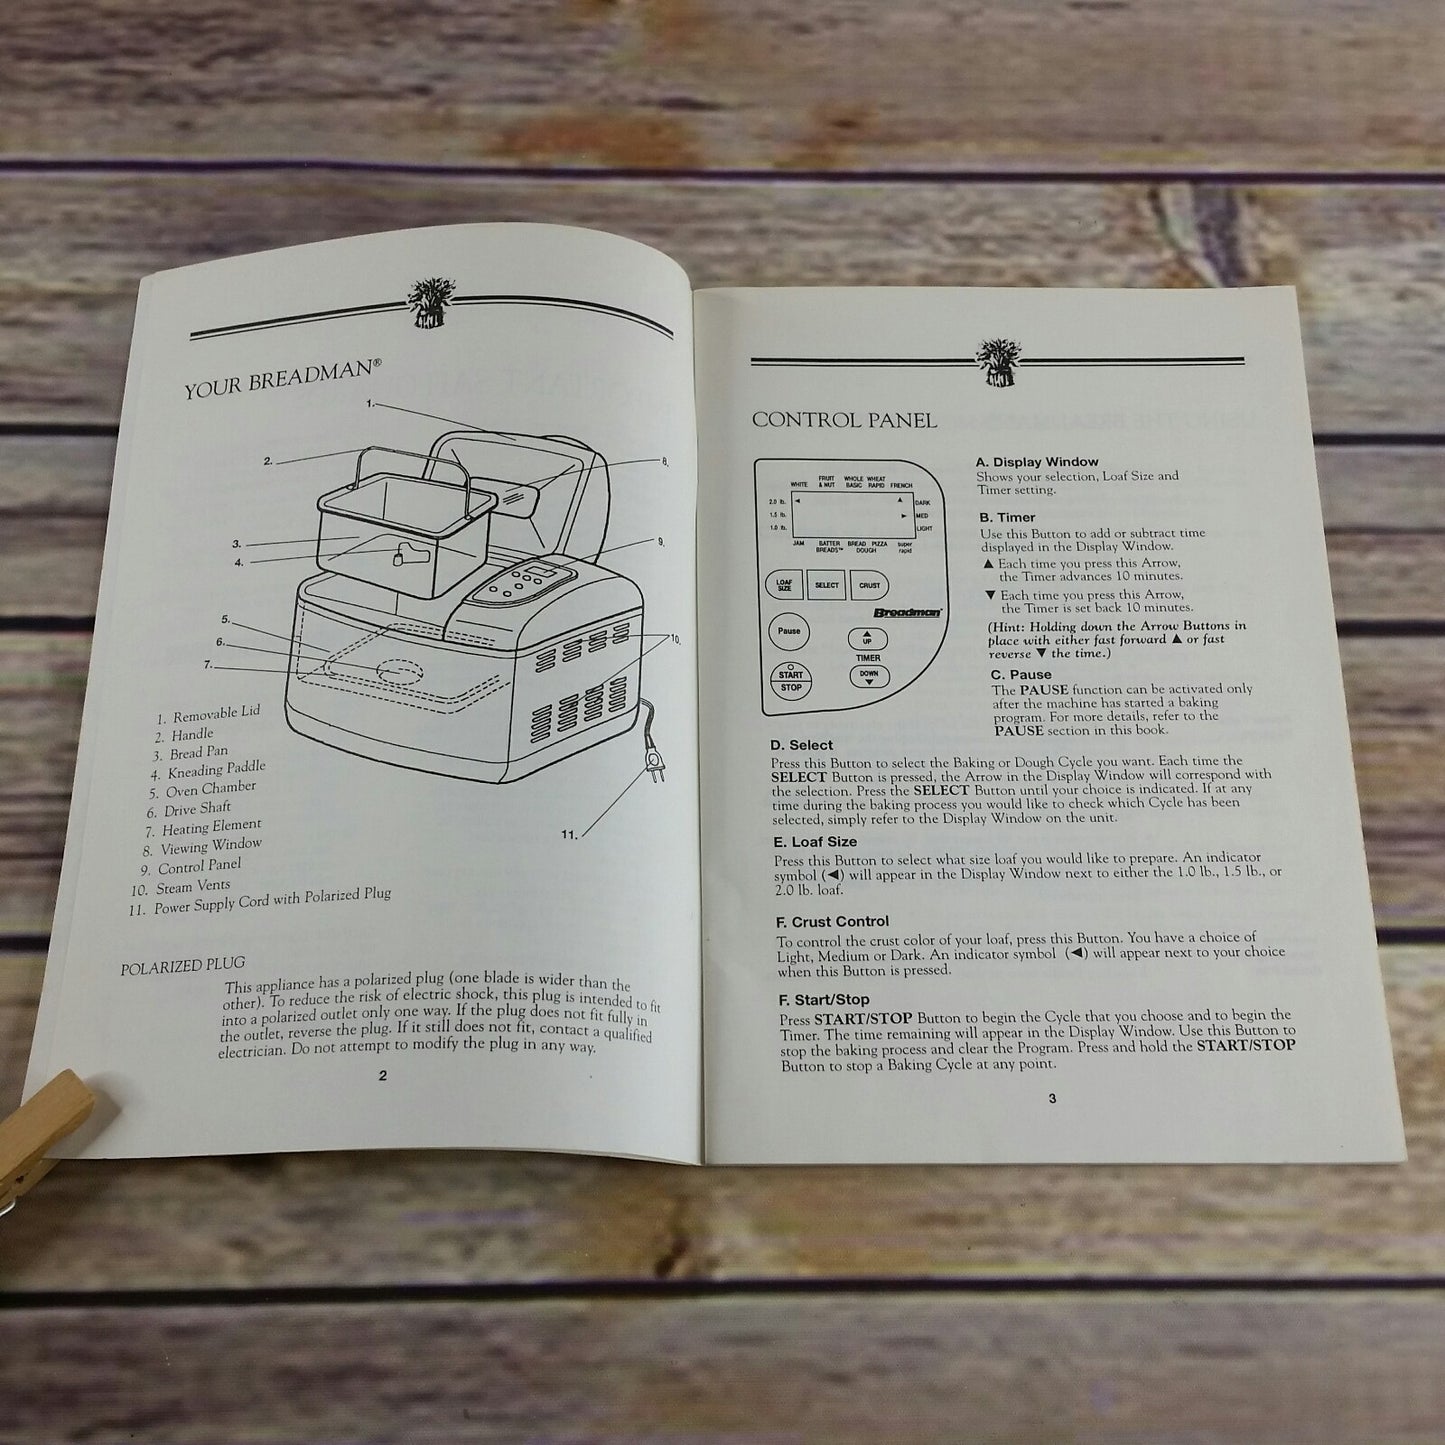 Vintage Breadman Bread Maker Instructions Recipes Manual Bread Bakery Cook Book TR85 1999 - At Grandma's Table